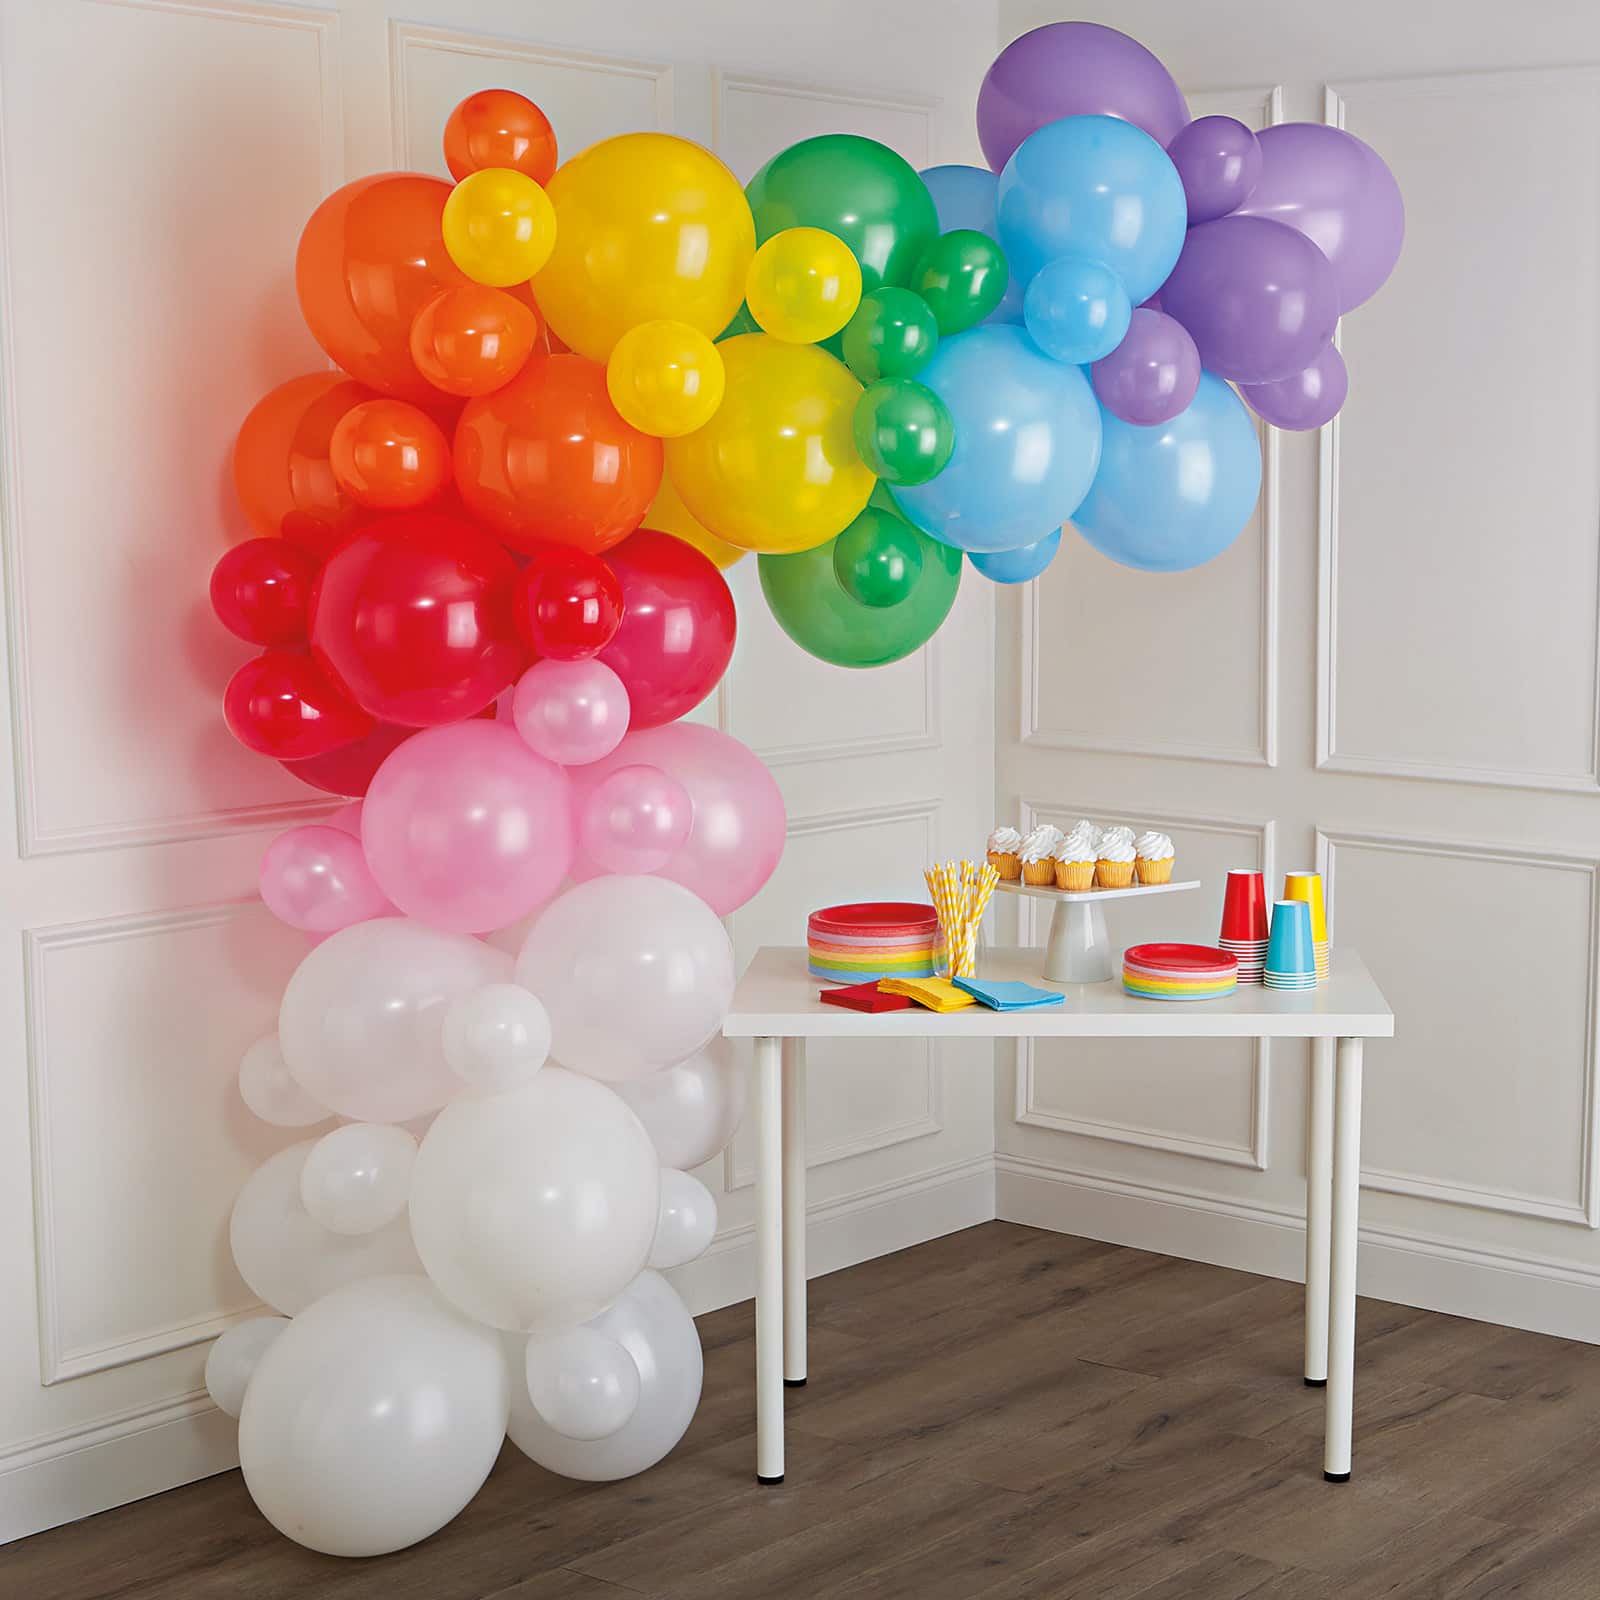 10ft. Rainbow Balloon Garland by Celebrate It&#x2122;